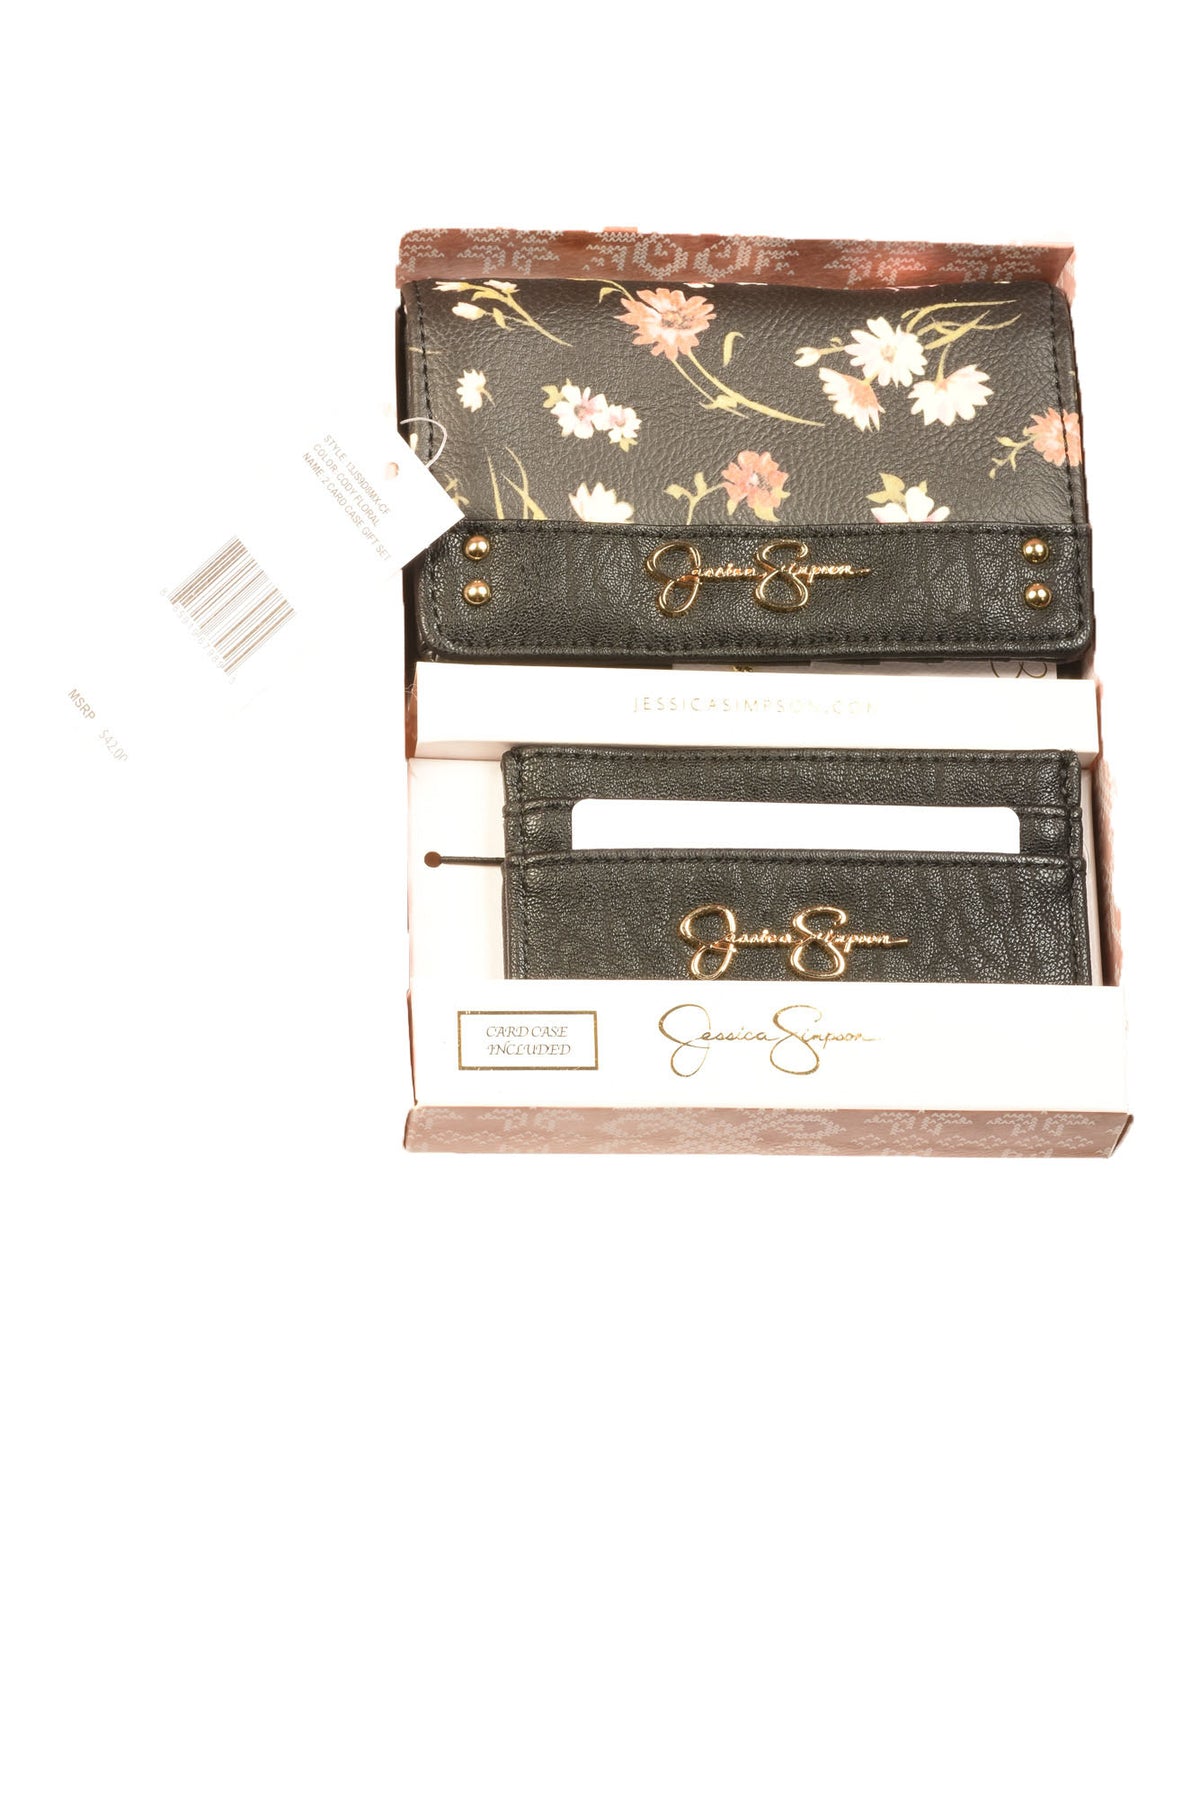 Jessica Simpson Cardcase Gift Set